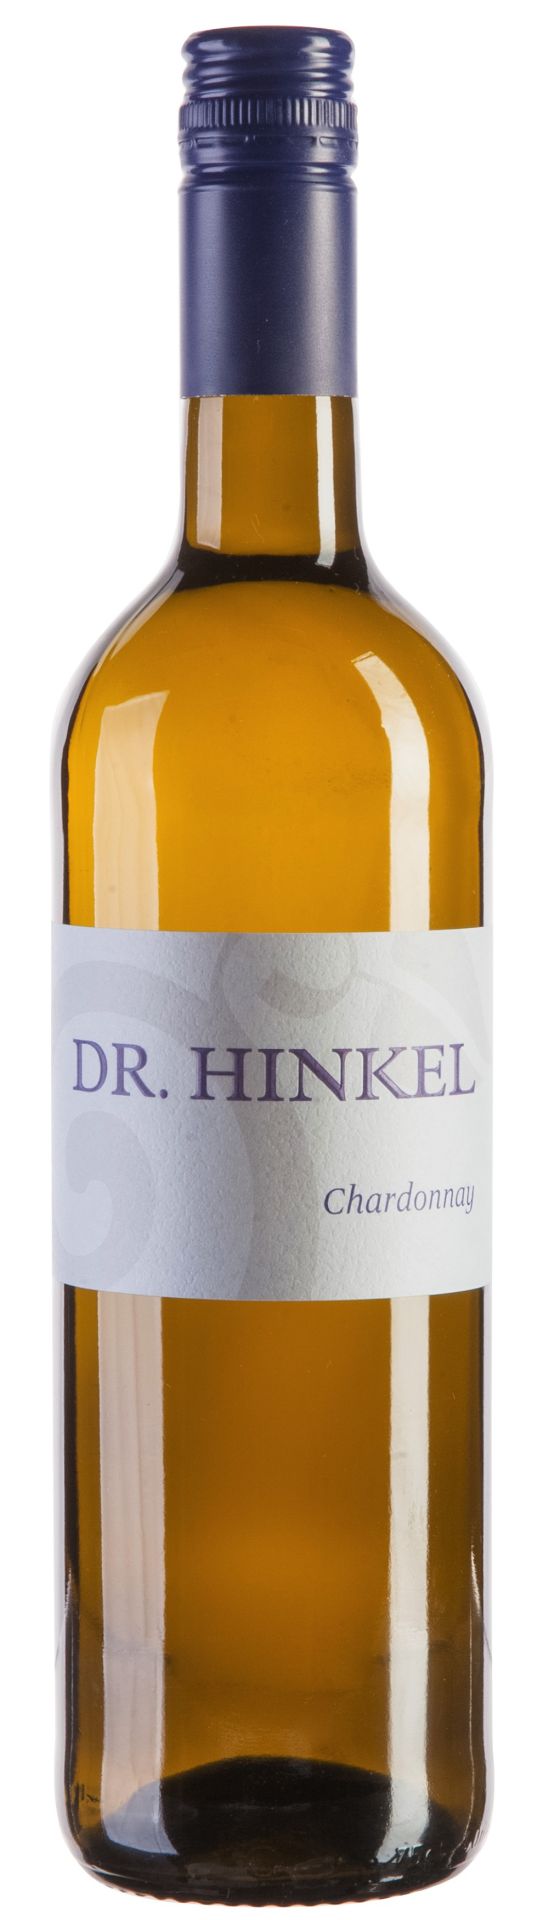 Hinkel Chardonnay - Rheinhessen -feinherb- 0,75l - 11,5% vol.